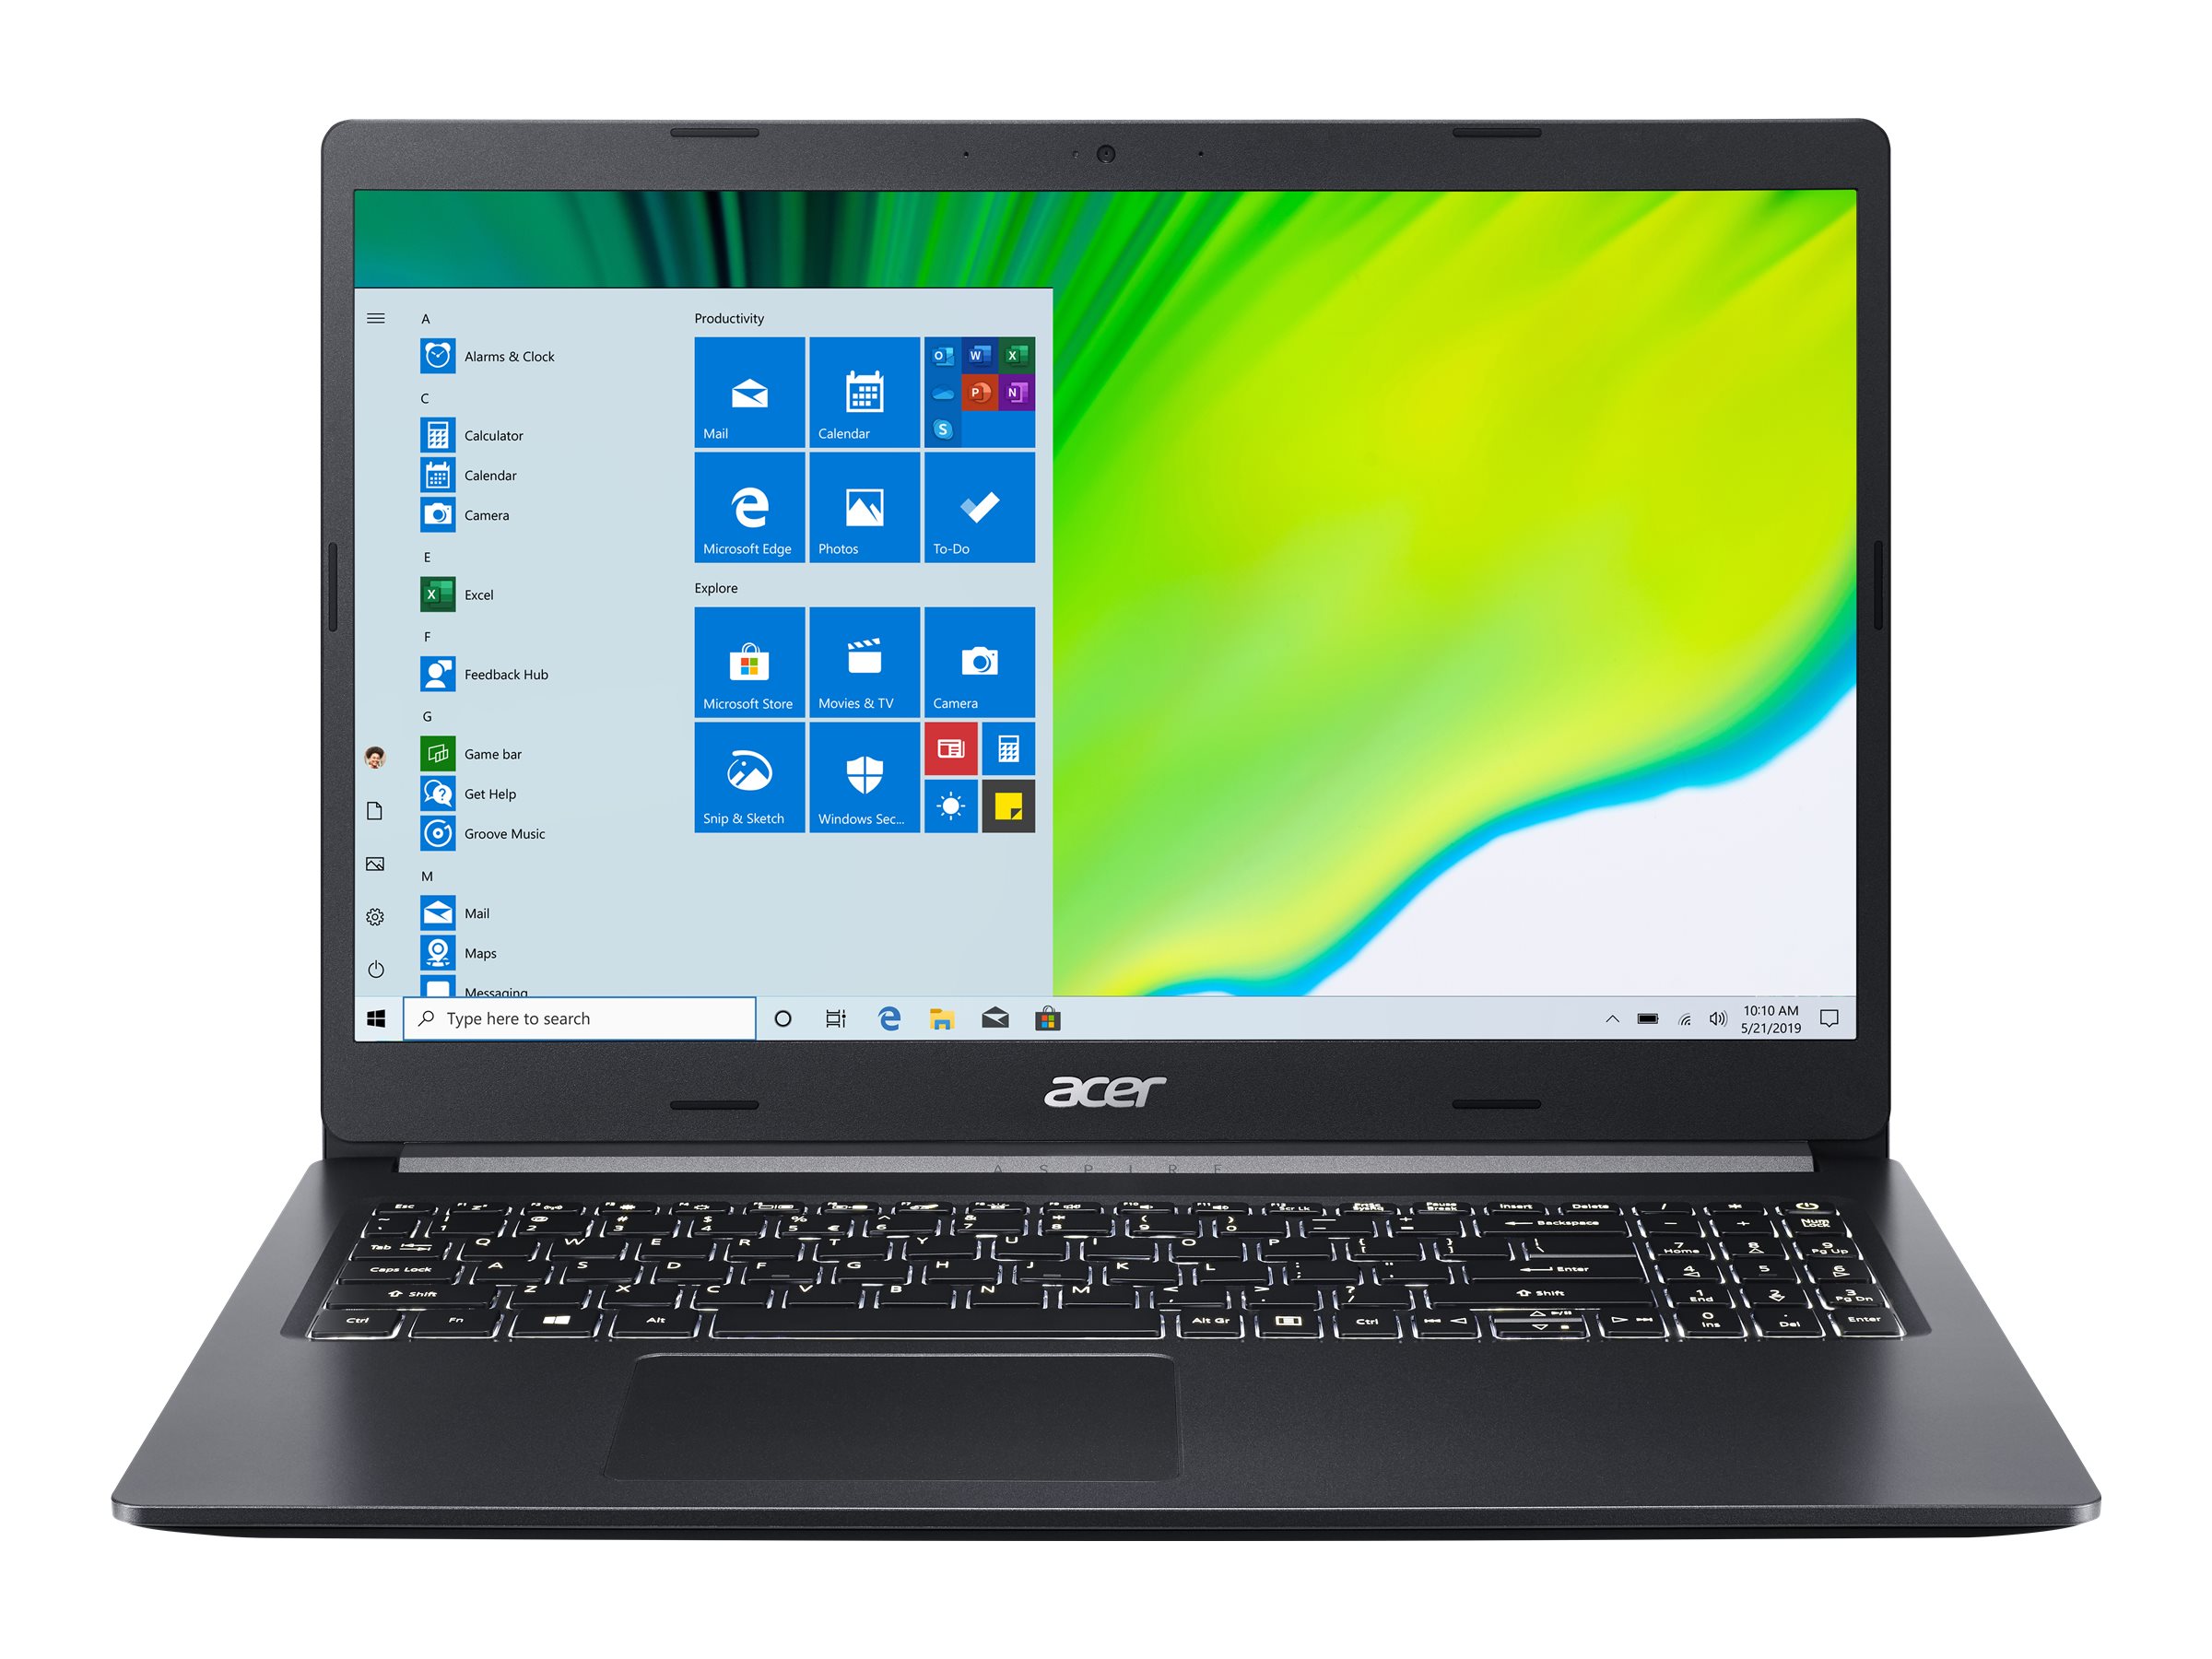 Acer Aspire 5 A515-44-R4M5 - AMD Ryzen 5 4500U / 2.3 GHz - Win 10 Home 64-bit - Radeon HD - 8 GB RAM - 512 GB SSD - 15.6" 1366 x 768 (HD) - Wi-Fi 5 - charcoal black - kbd: US Intl - image 2 of 10